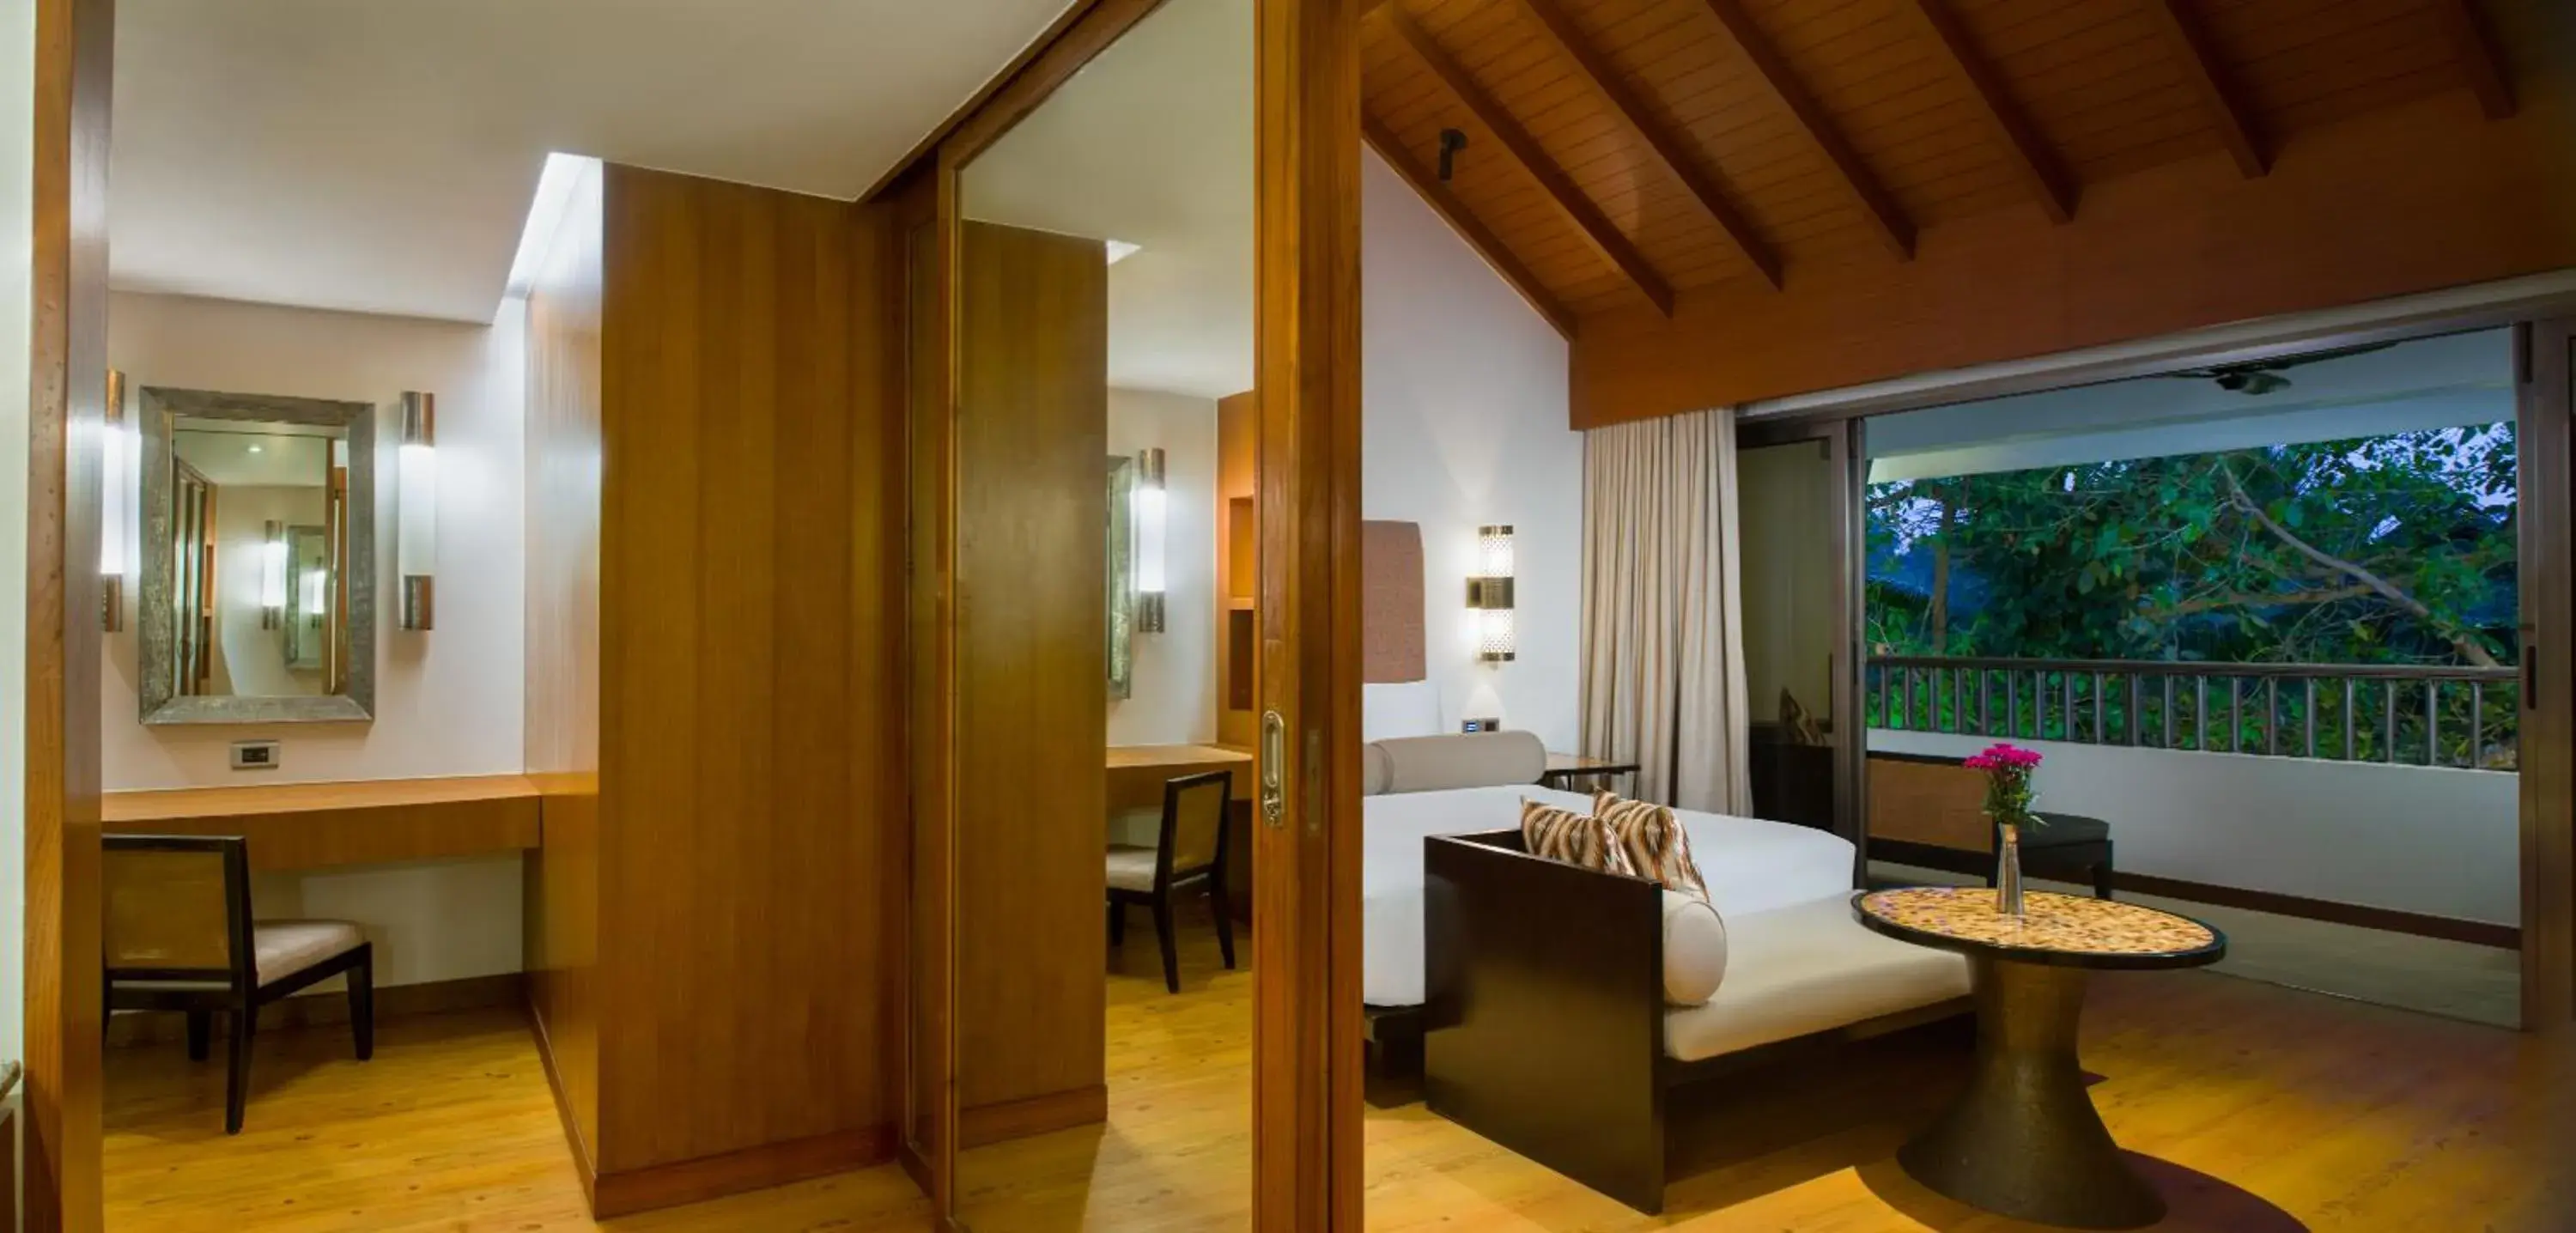 Bedroom in Alila Diwa Goa - A Hyatt Brand